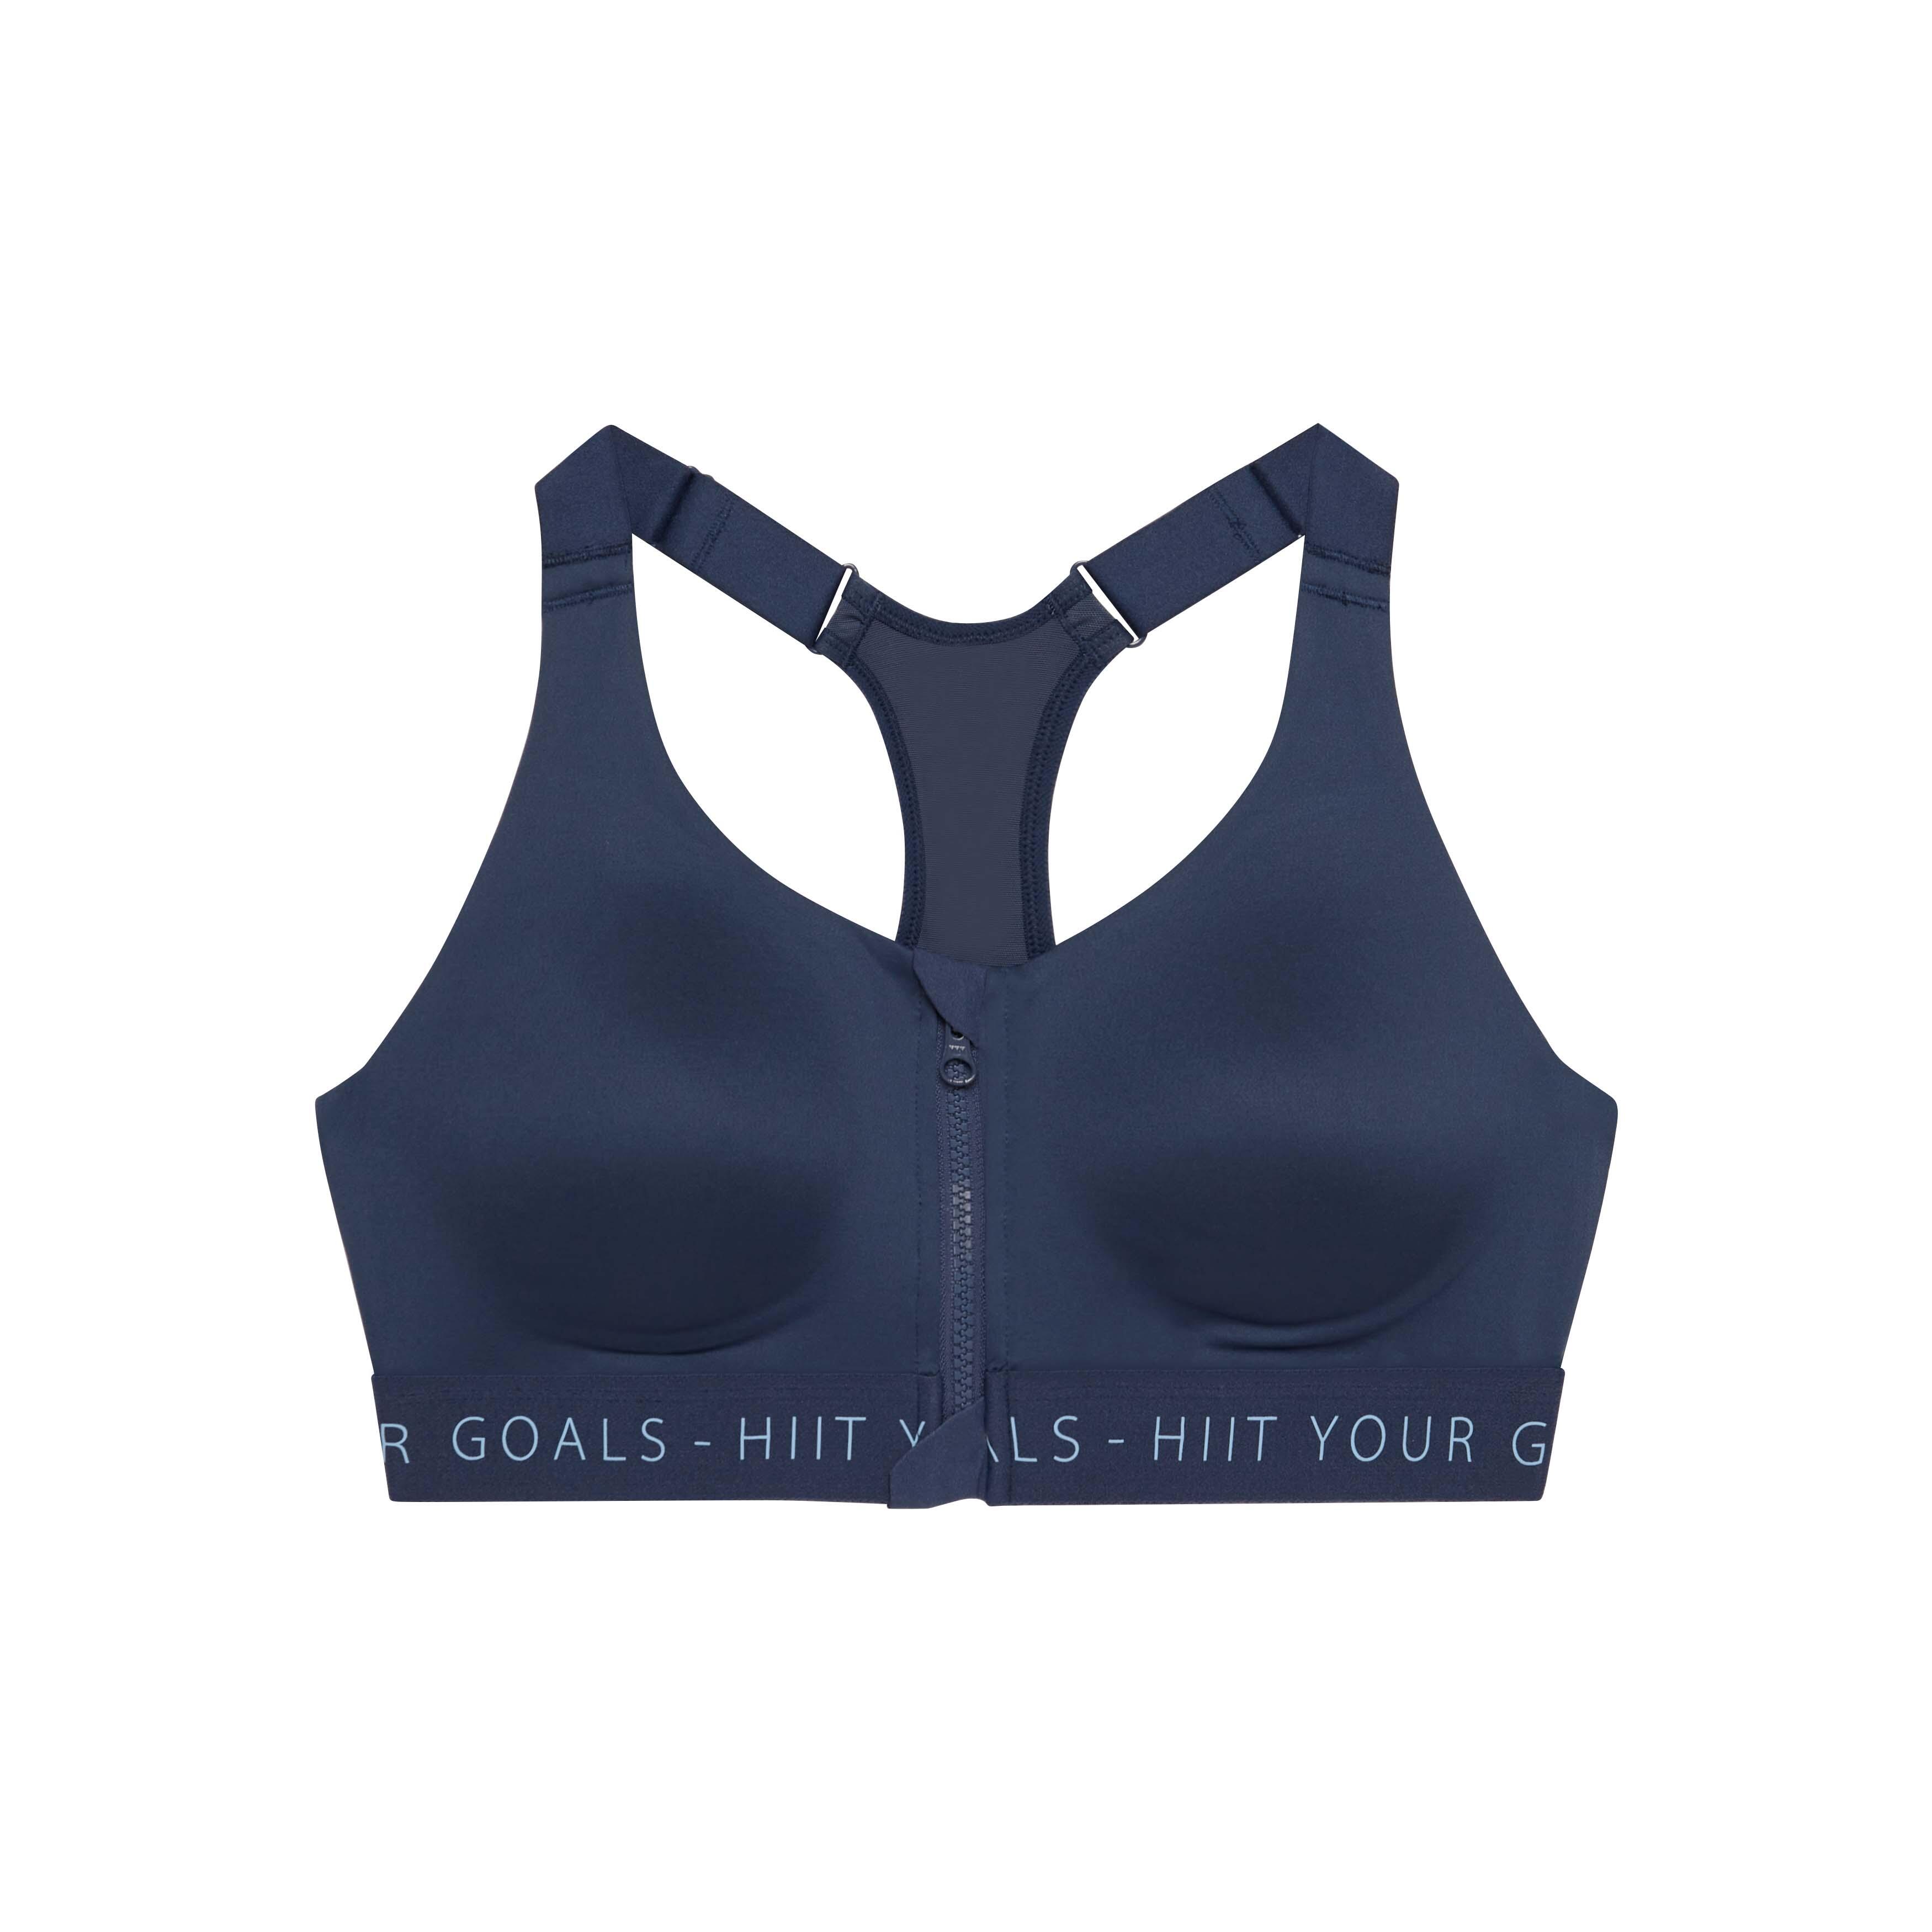 HIIT sports bra in blue